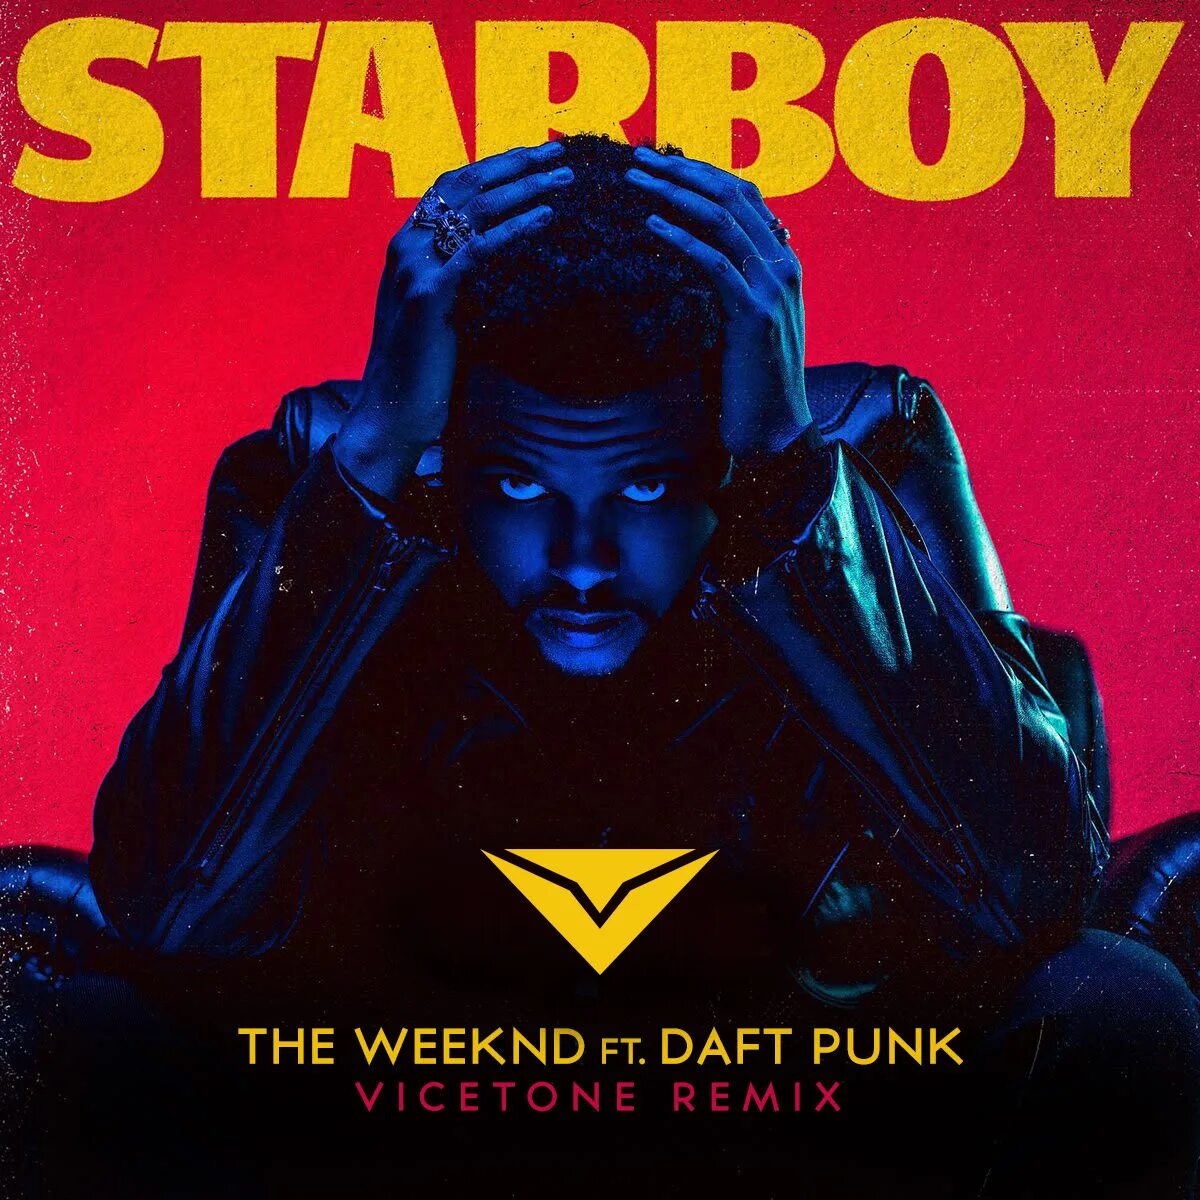 The weekend Daft Punk Starboy. Daft Punk the Weeknd. The Weeknd - Starboy ft. Daft Punk. Star boy the Weeknd. Star boy the weekend